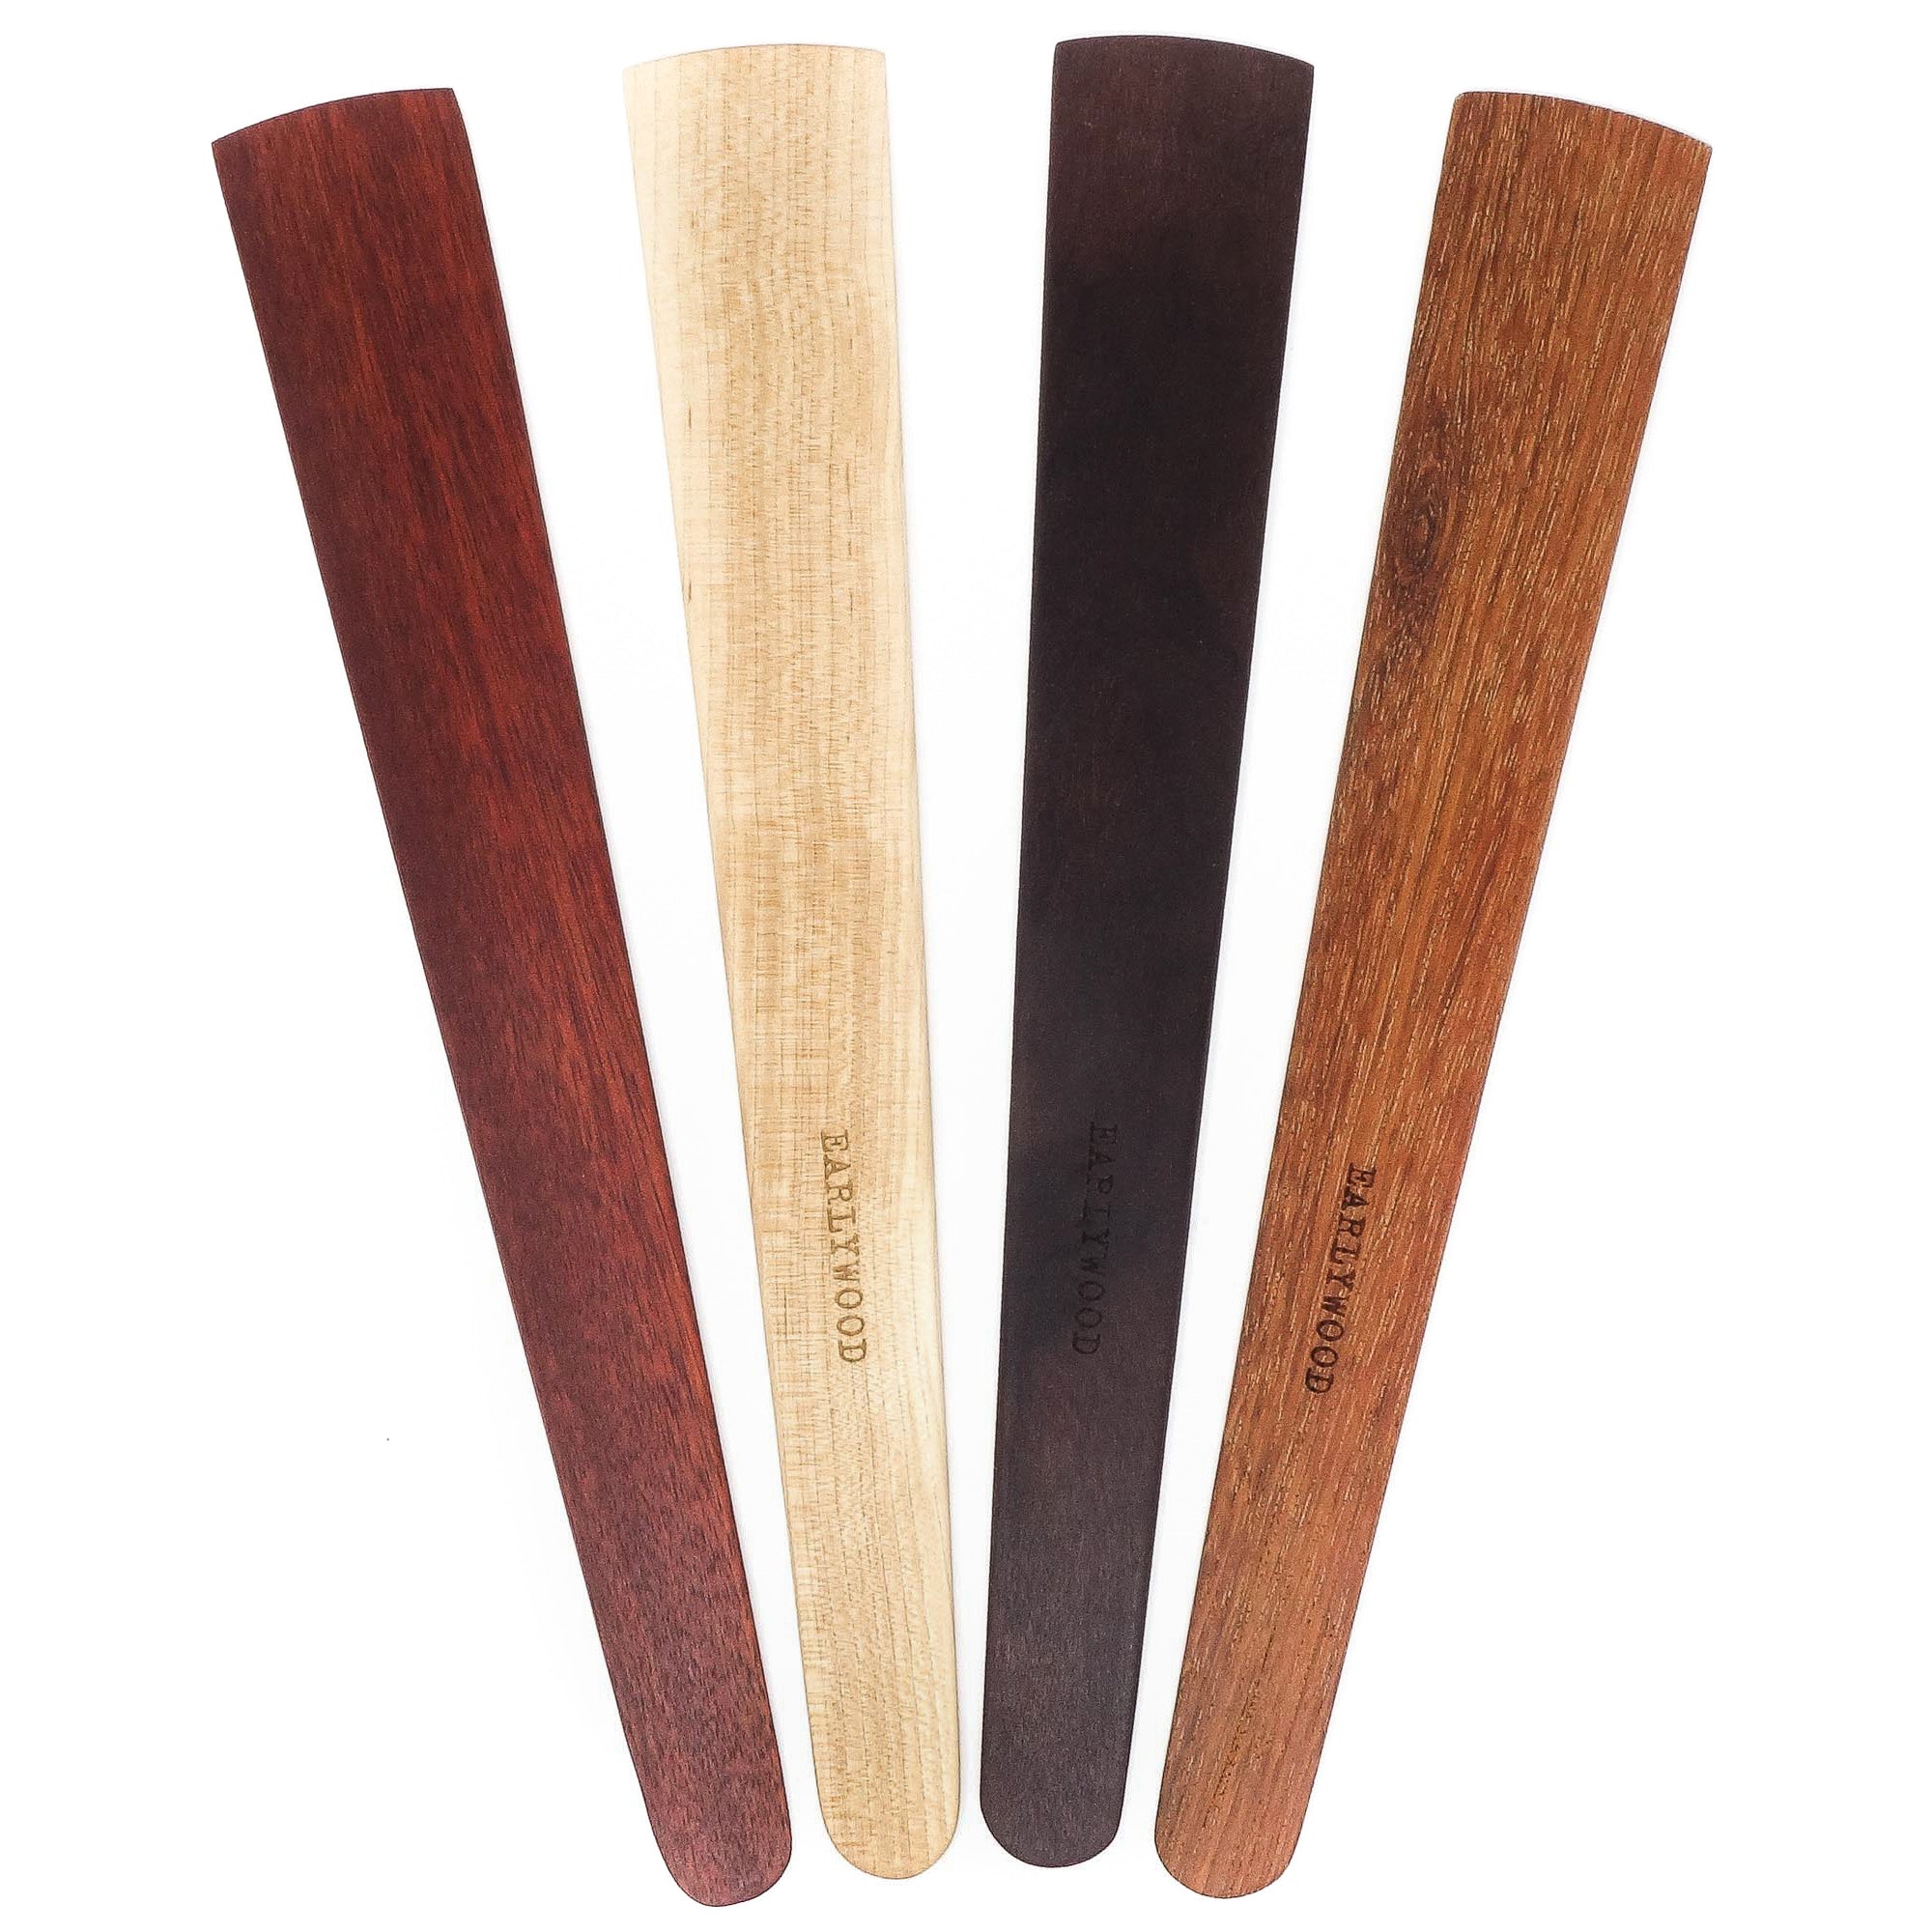 wood wok spatula - Earlywood